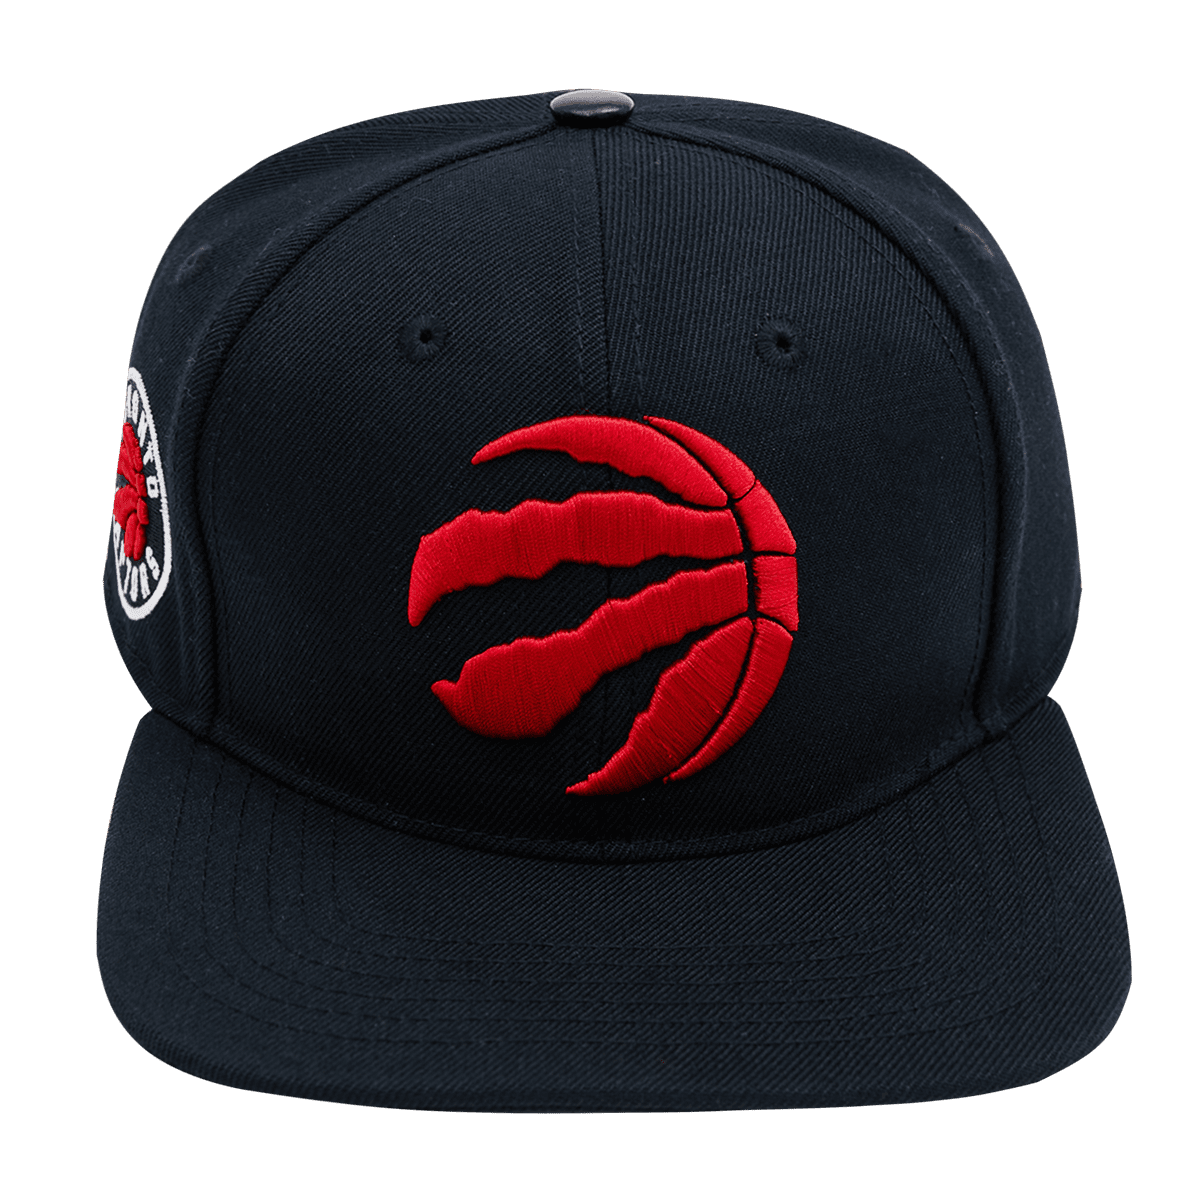 Toronto Raptors Pro Standard City Scape T-Shirt - Black